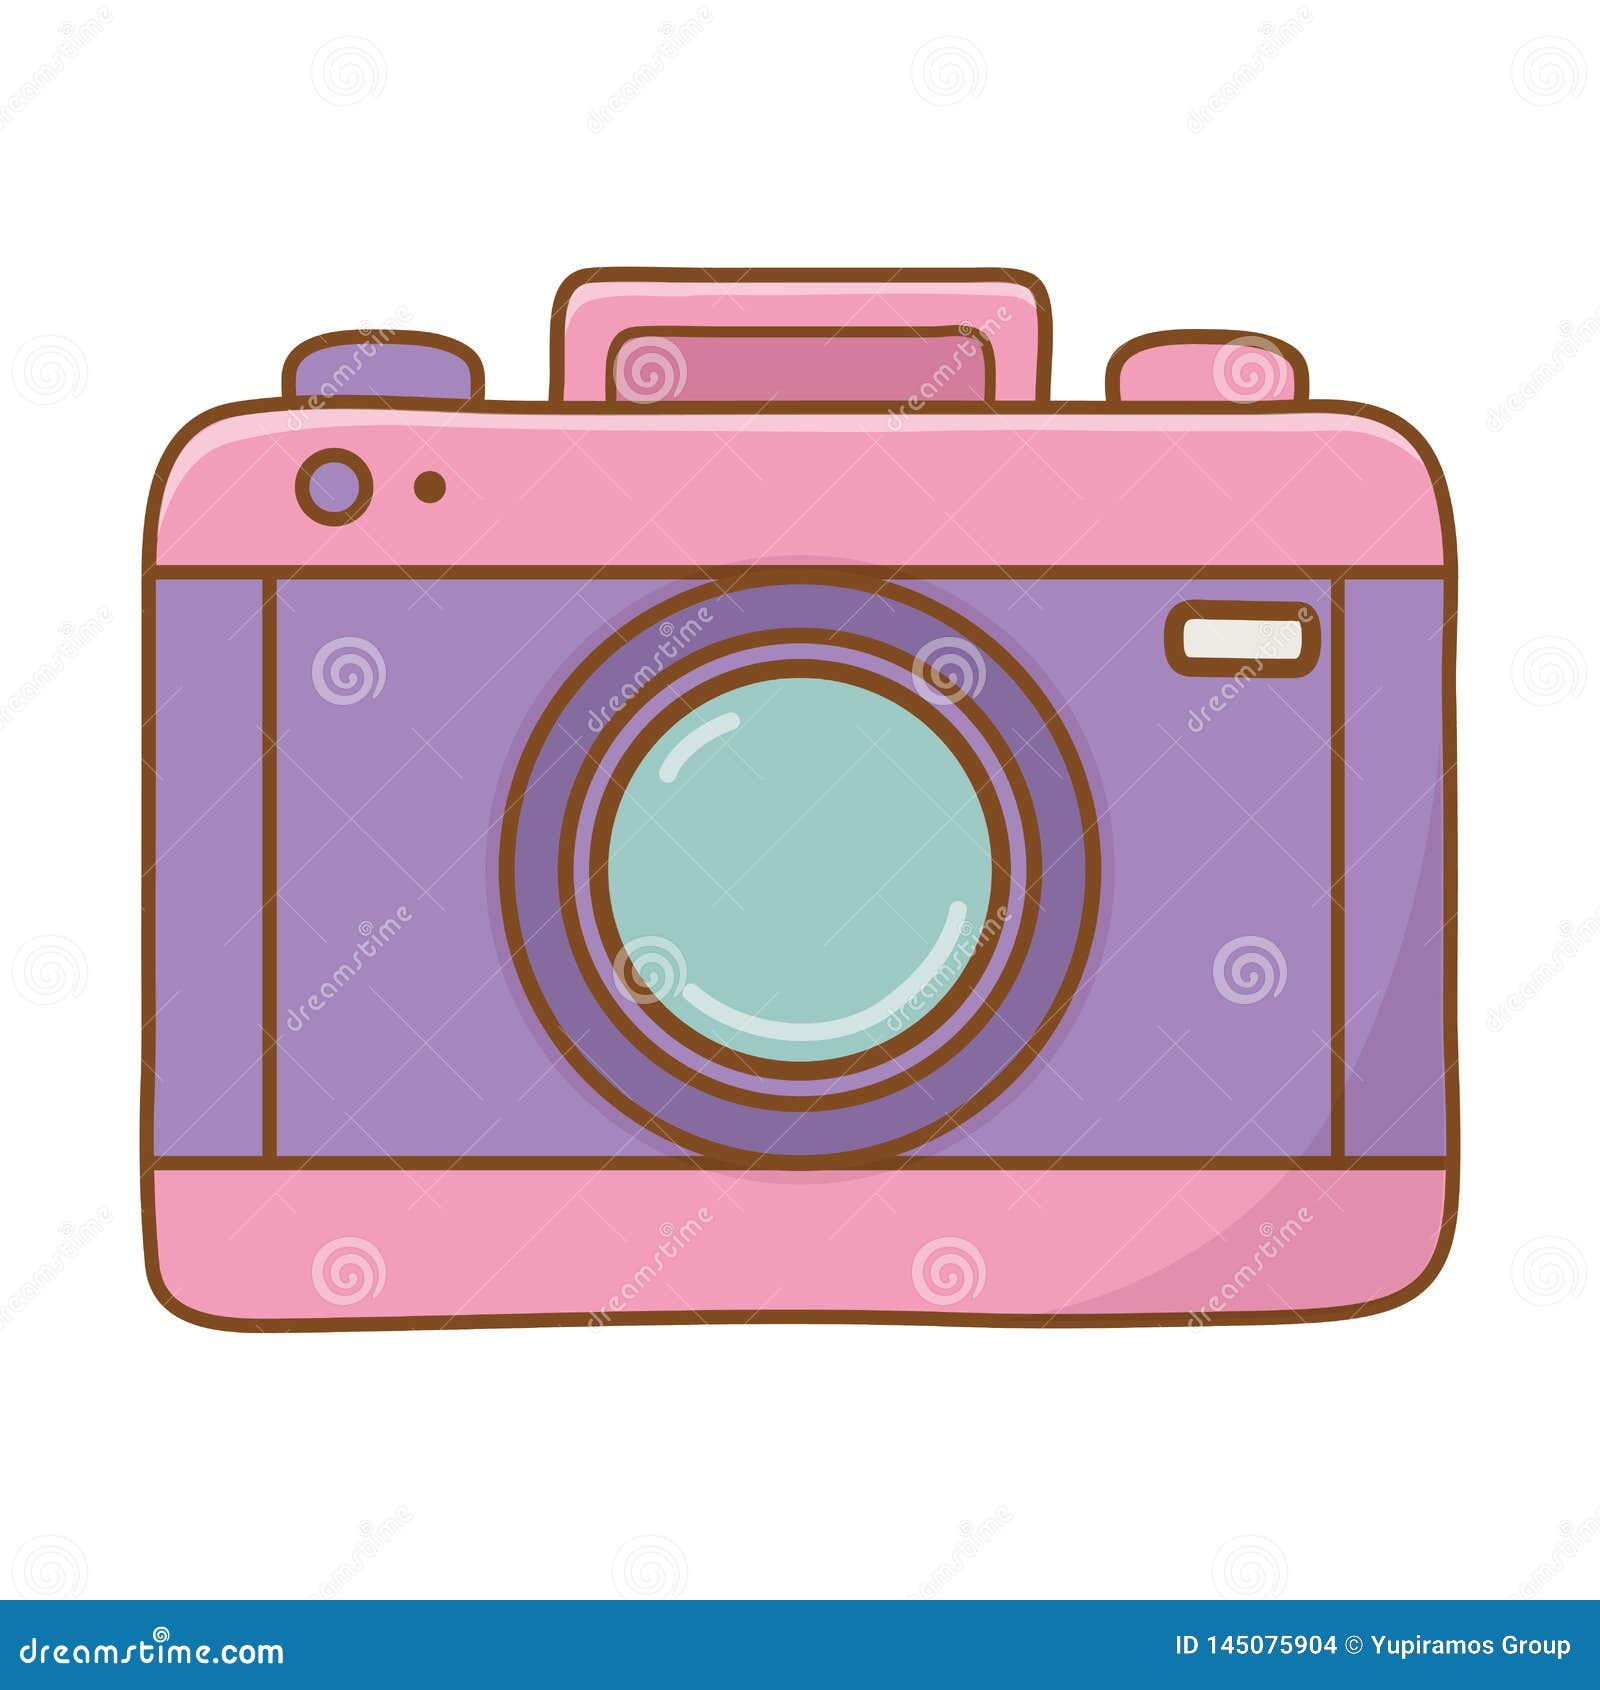 Photographic camera icon stock vector. Illustration of focus - 145075904